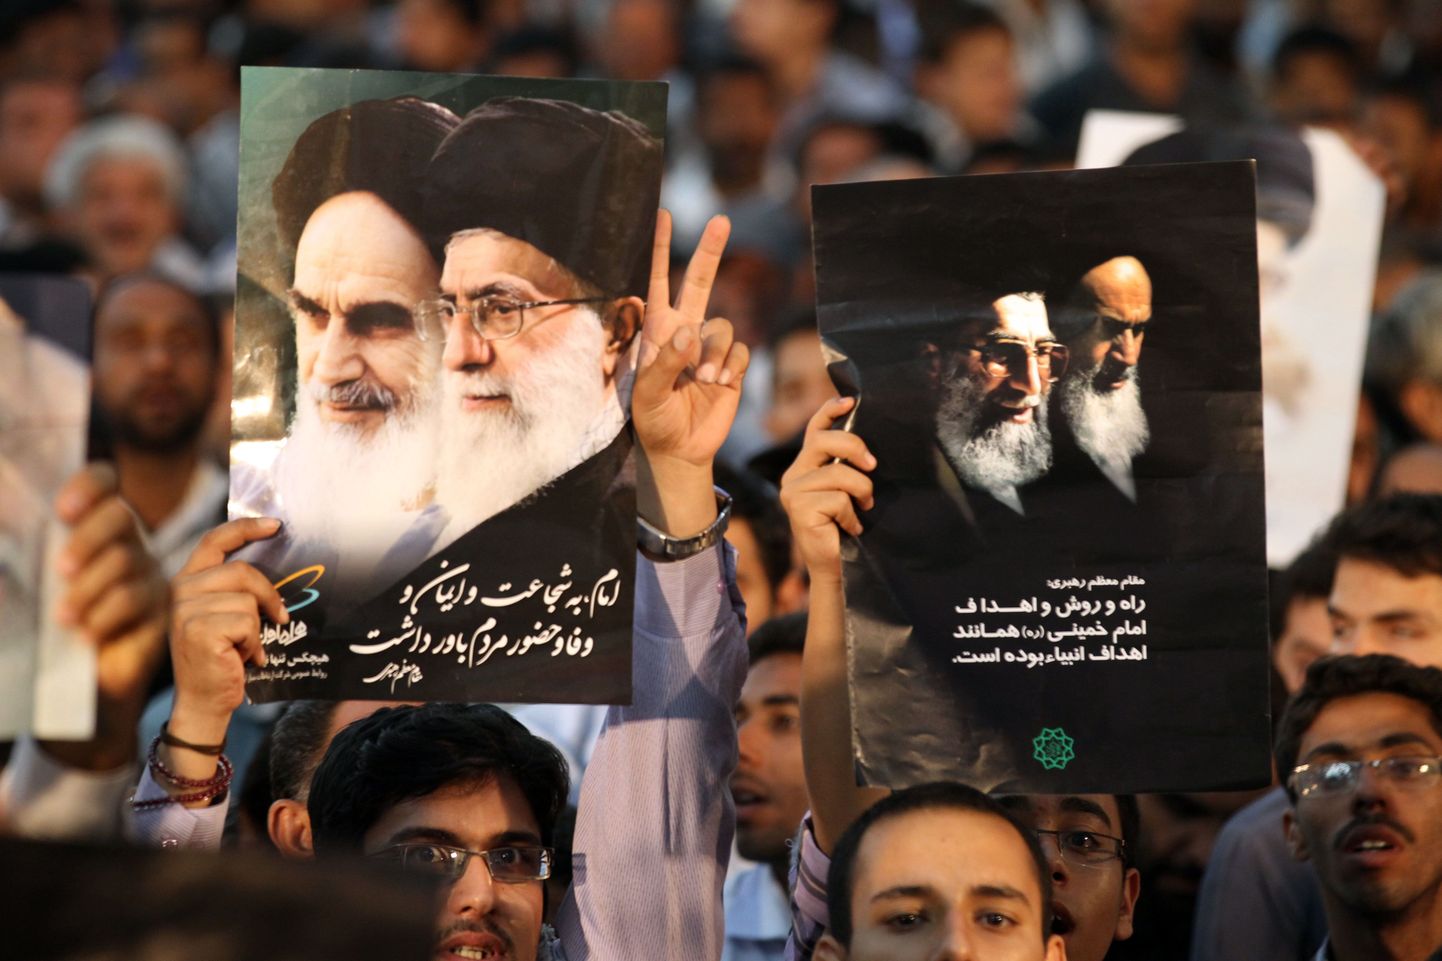 Iraanlased piltidega, millel on kõrvuti kaks ajatollat: Ruhollah Khomeini ja   Ali Khamenei (prillidega).